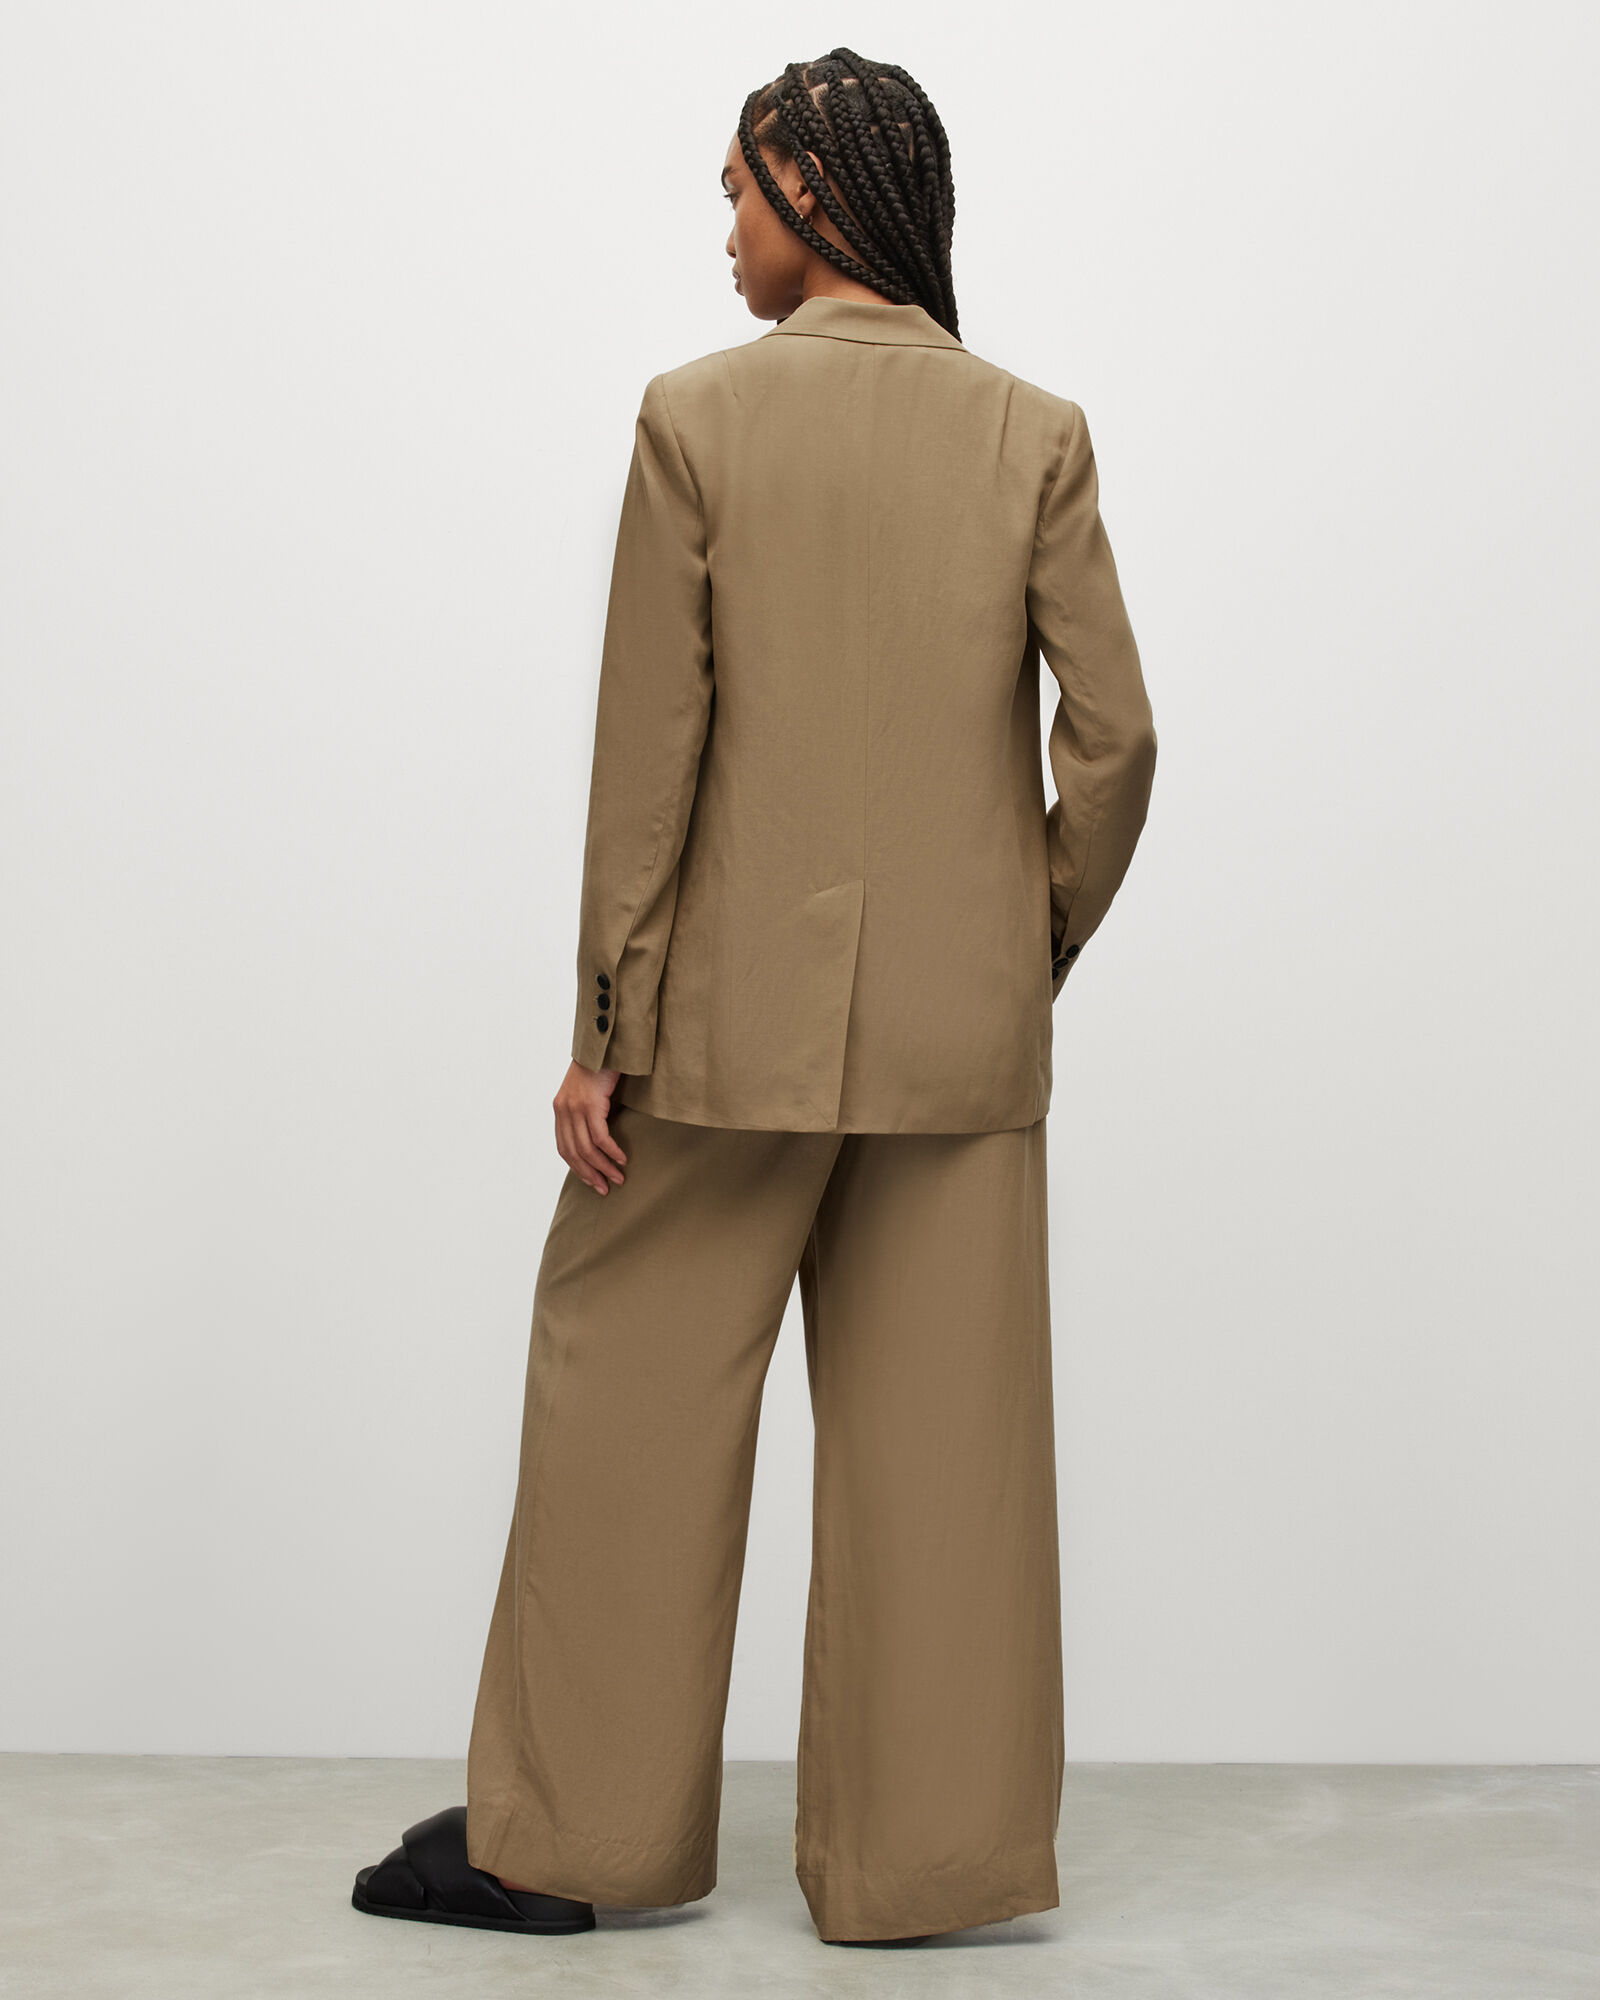 Rebdolls Womens Wide Leg Trousers  Dark Brown  2x  Target